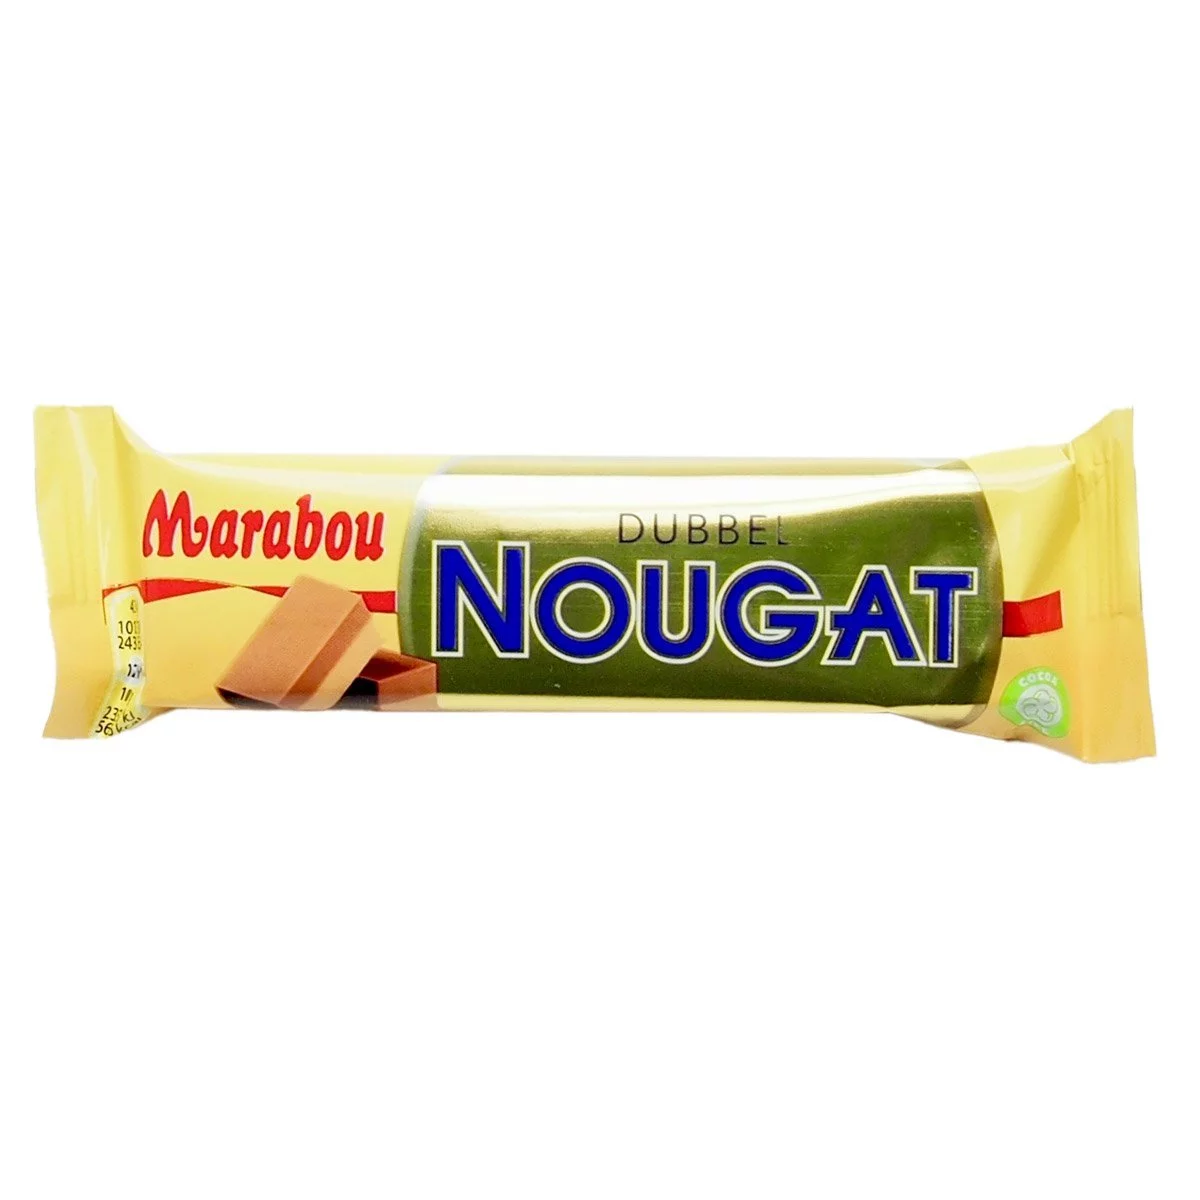 Marabou Dubbel Nougat (43g) 1